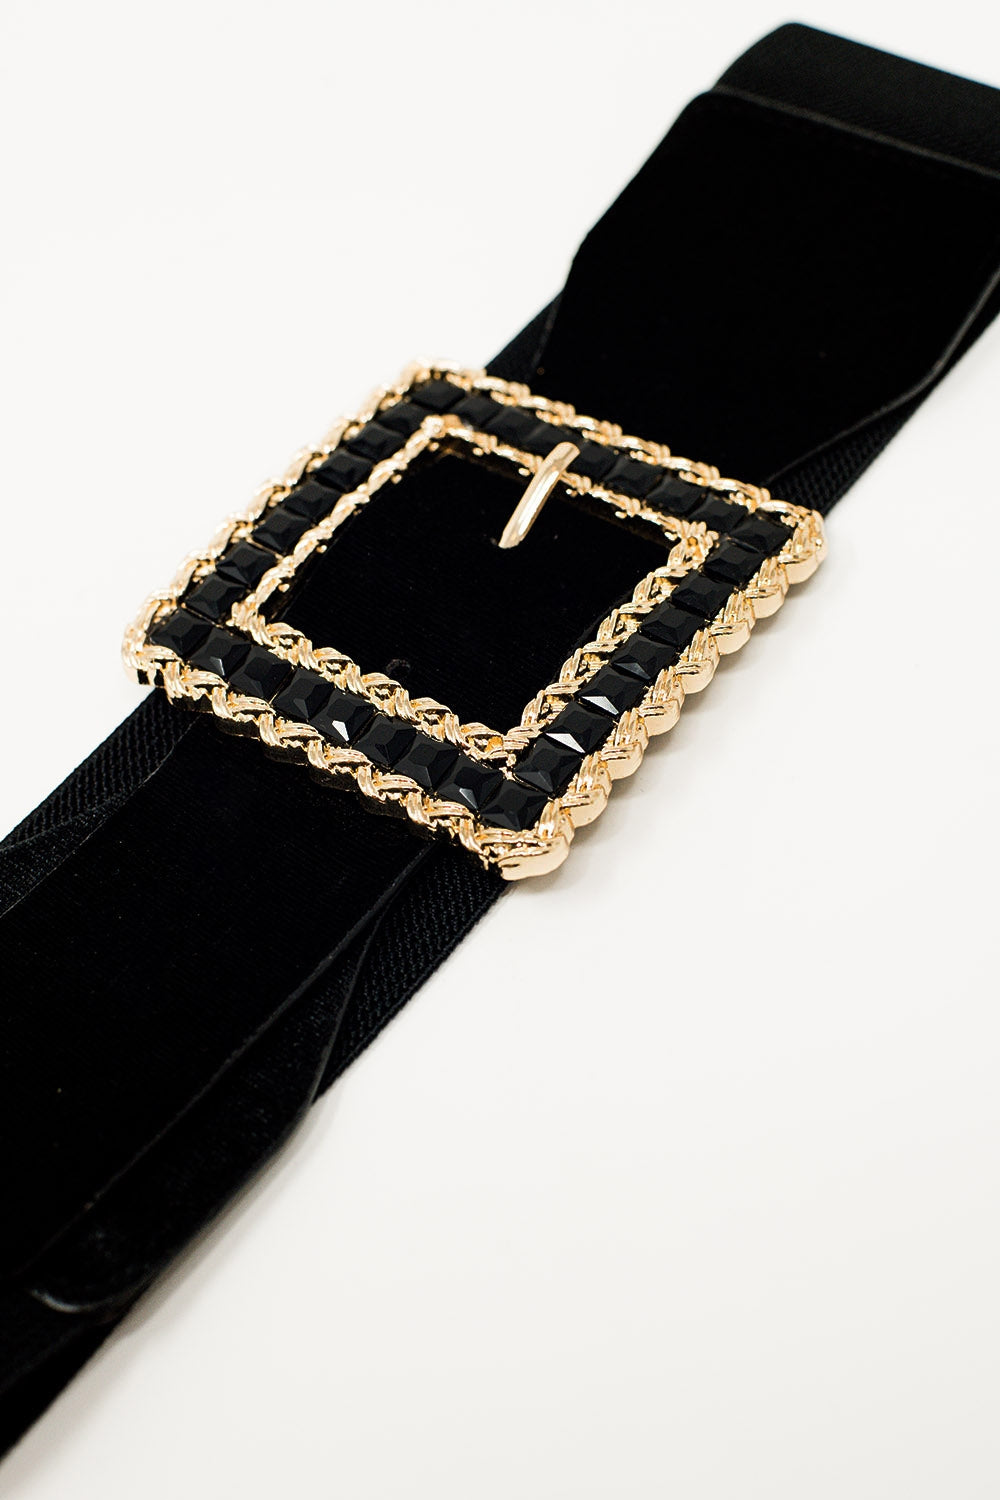 Cintura quadrata nera con strass ed elastico regolabile